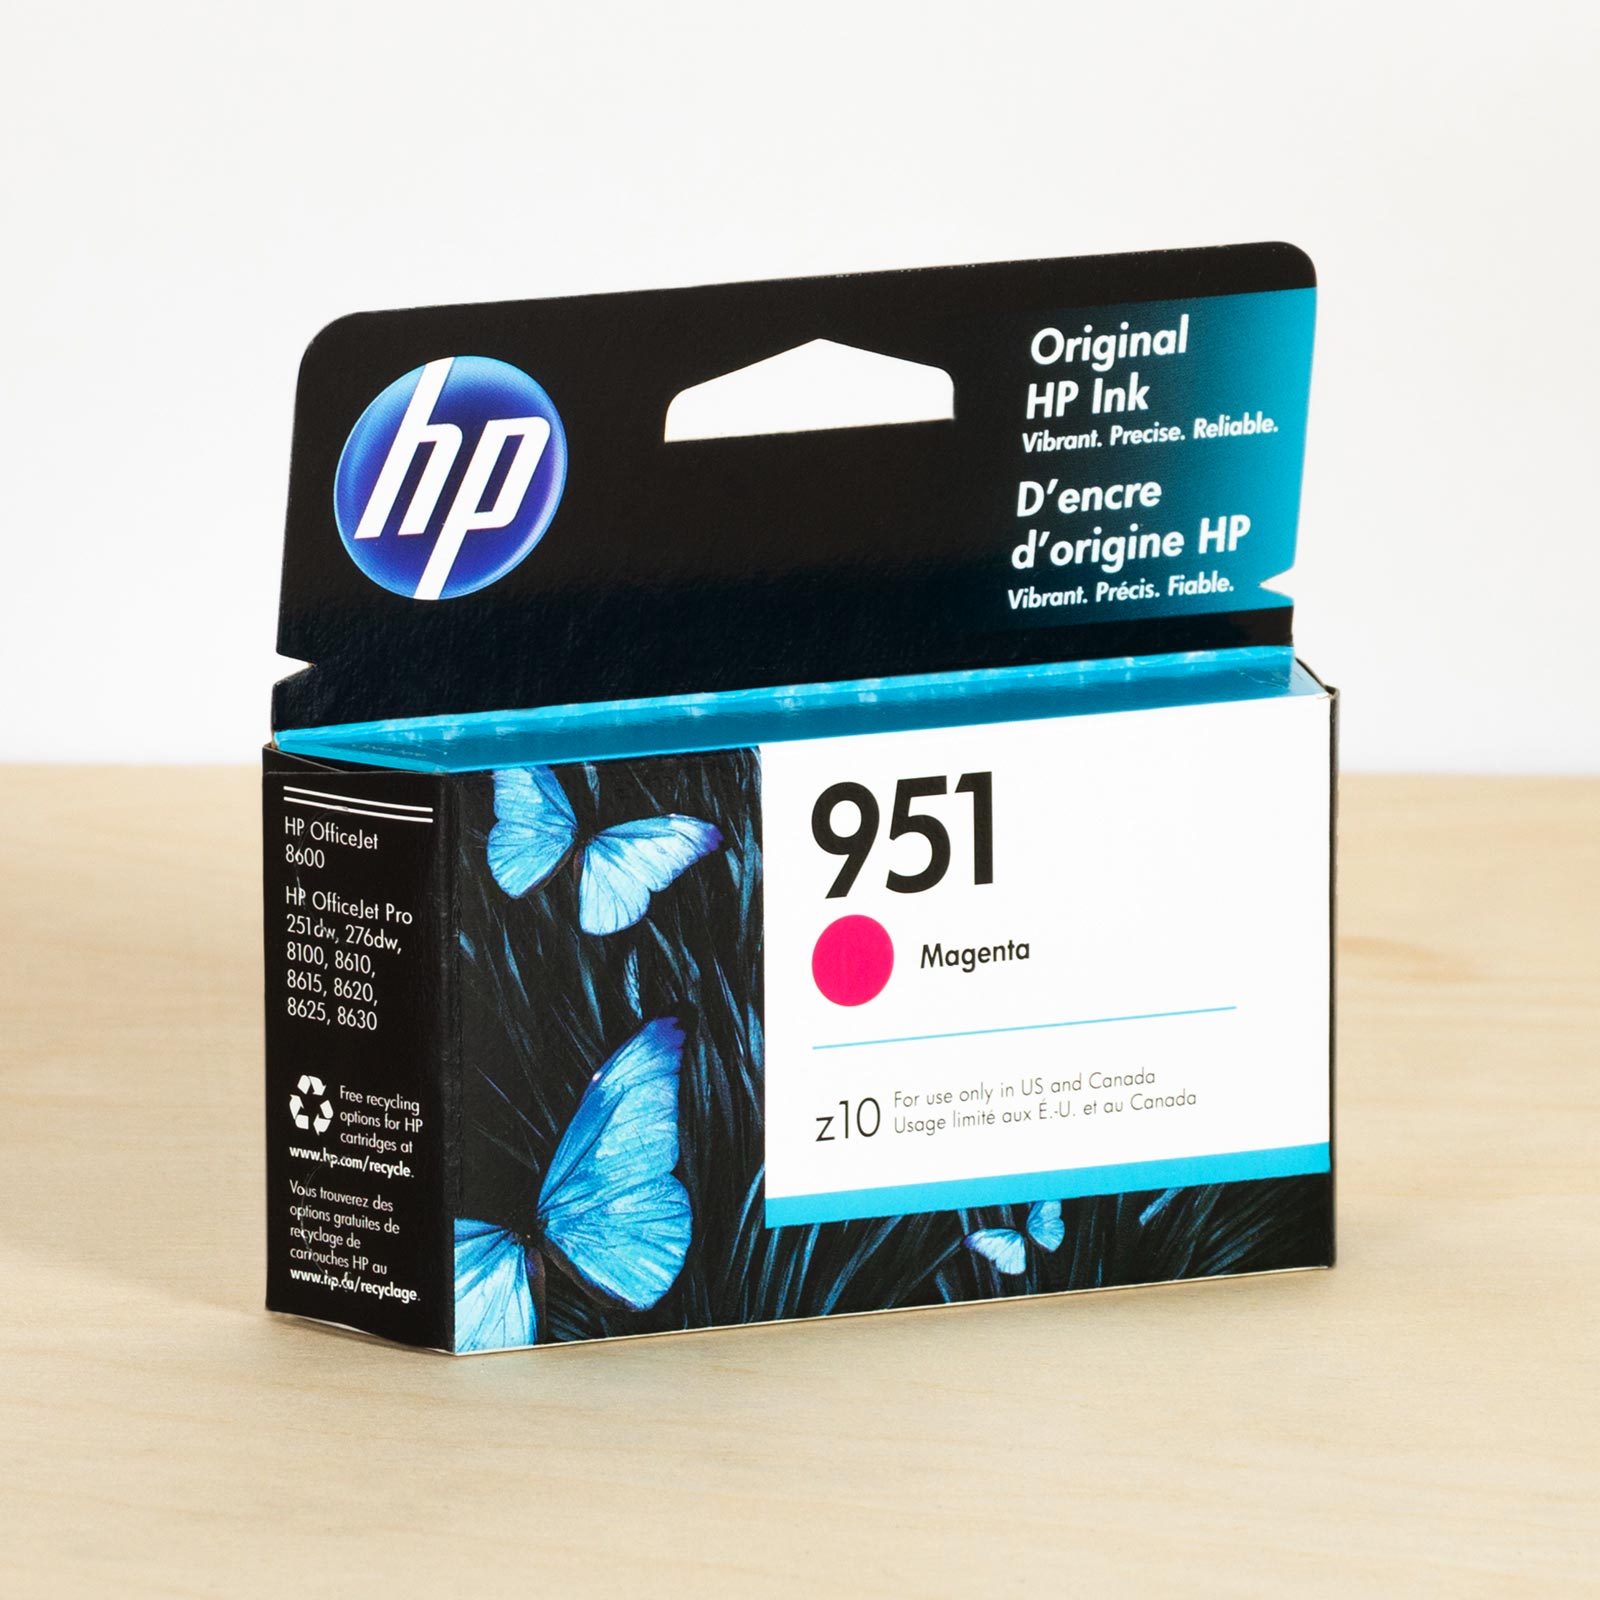 Hp ink-magenta-HP-OfficeJet-Pro-8610